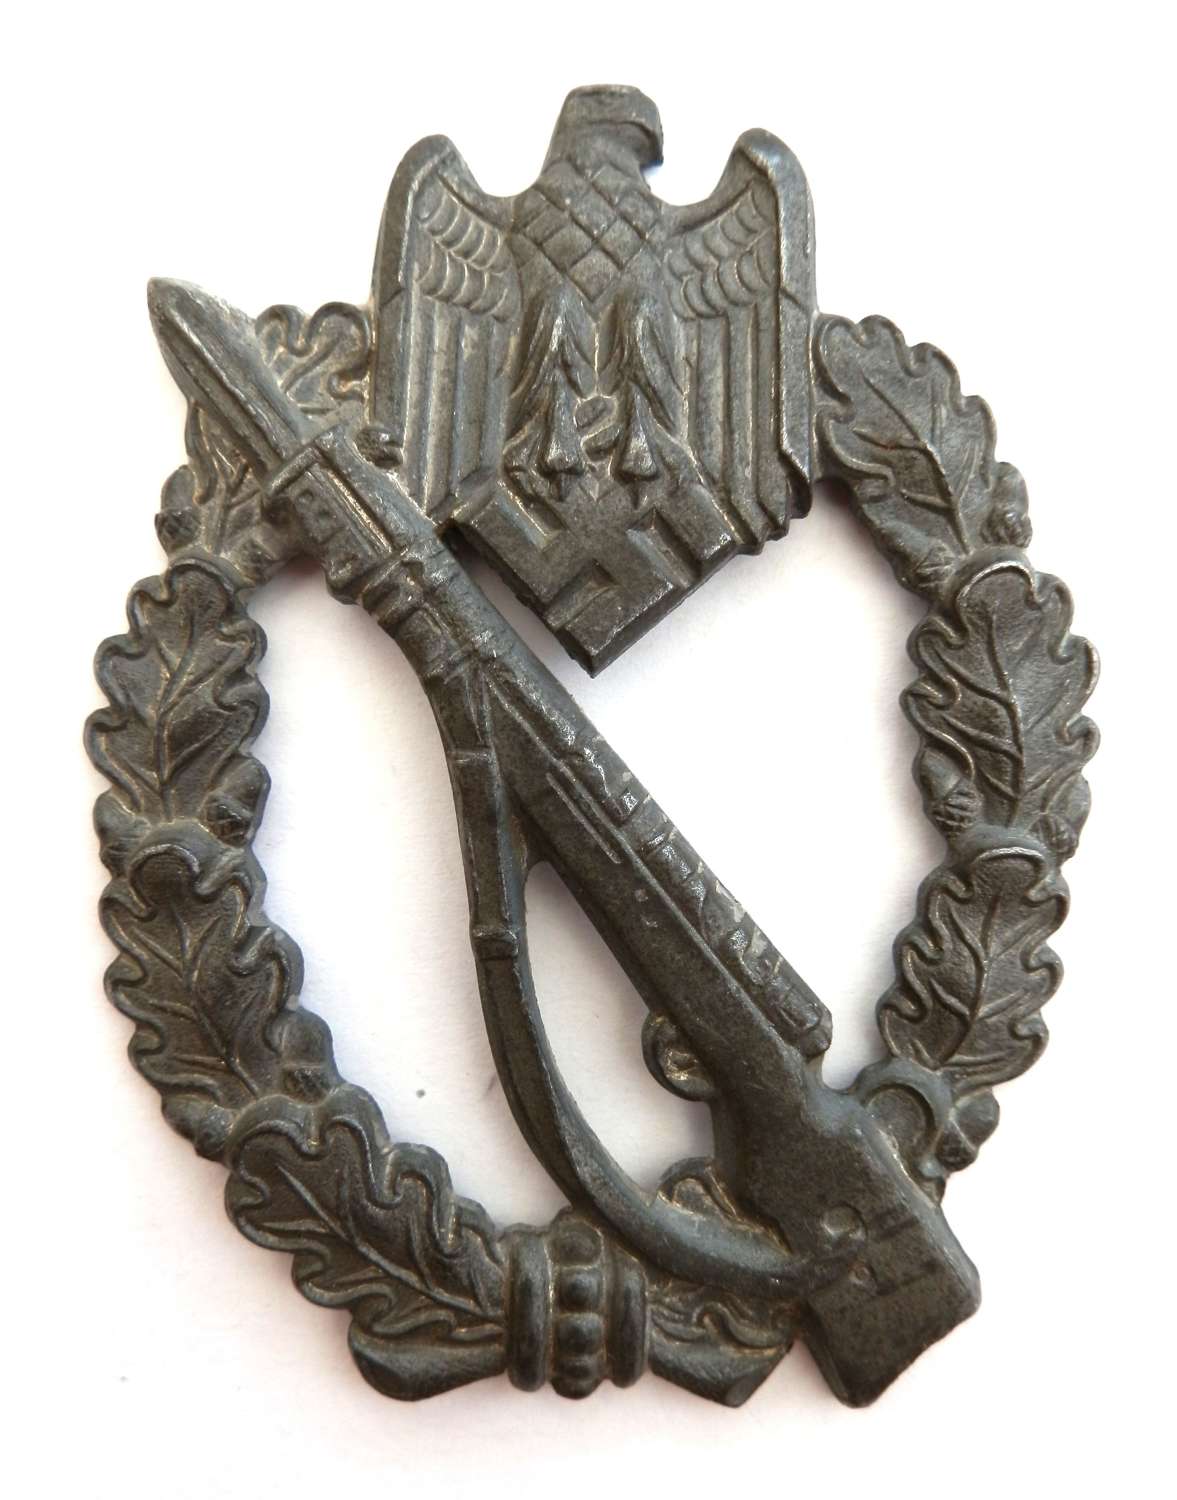 German Infantry Assault Badge. By ‘S.H.u.C.o. 41’, Sohni, Heubach